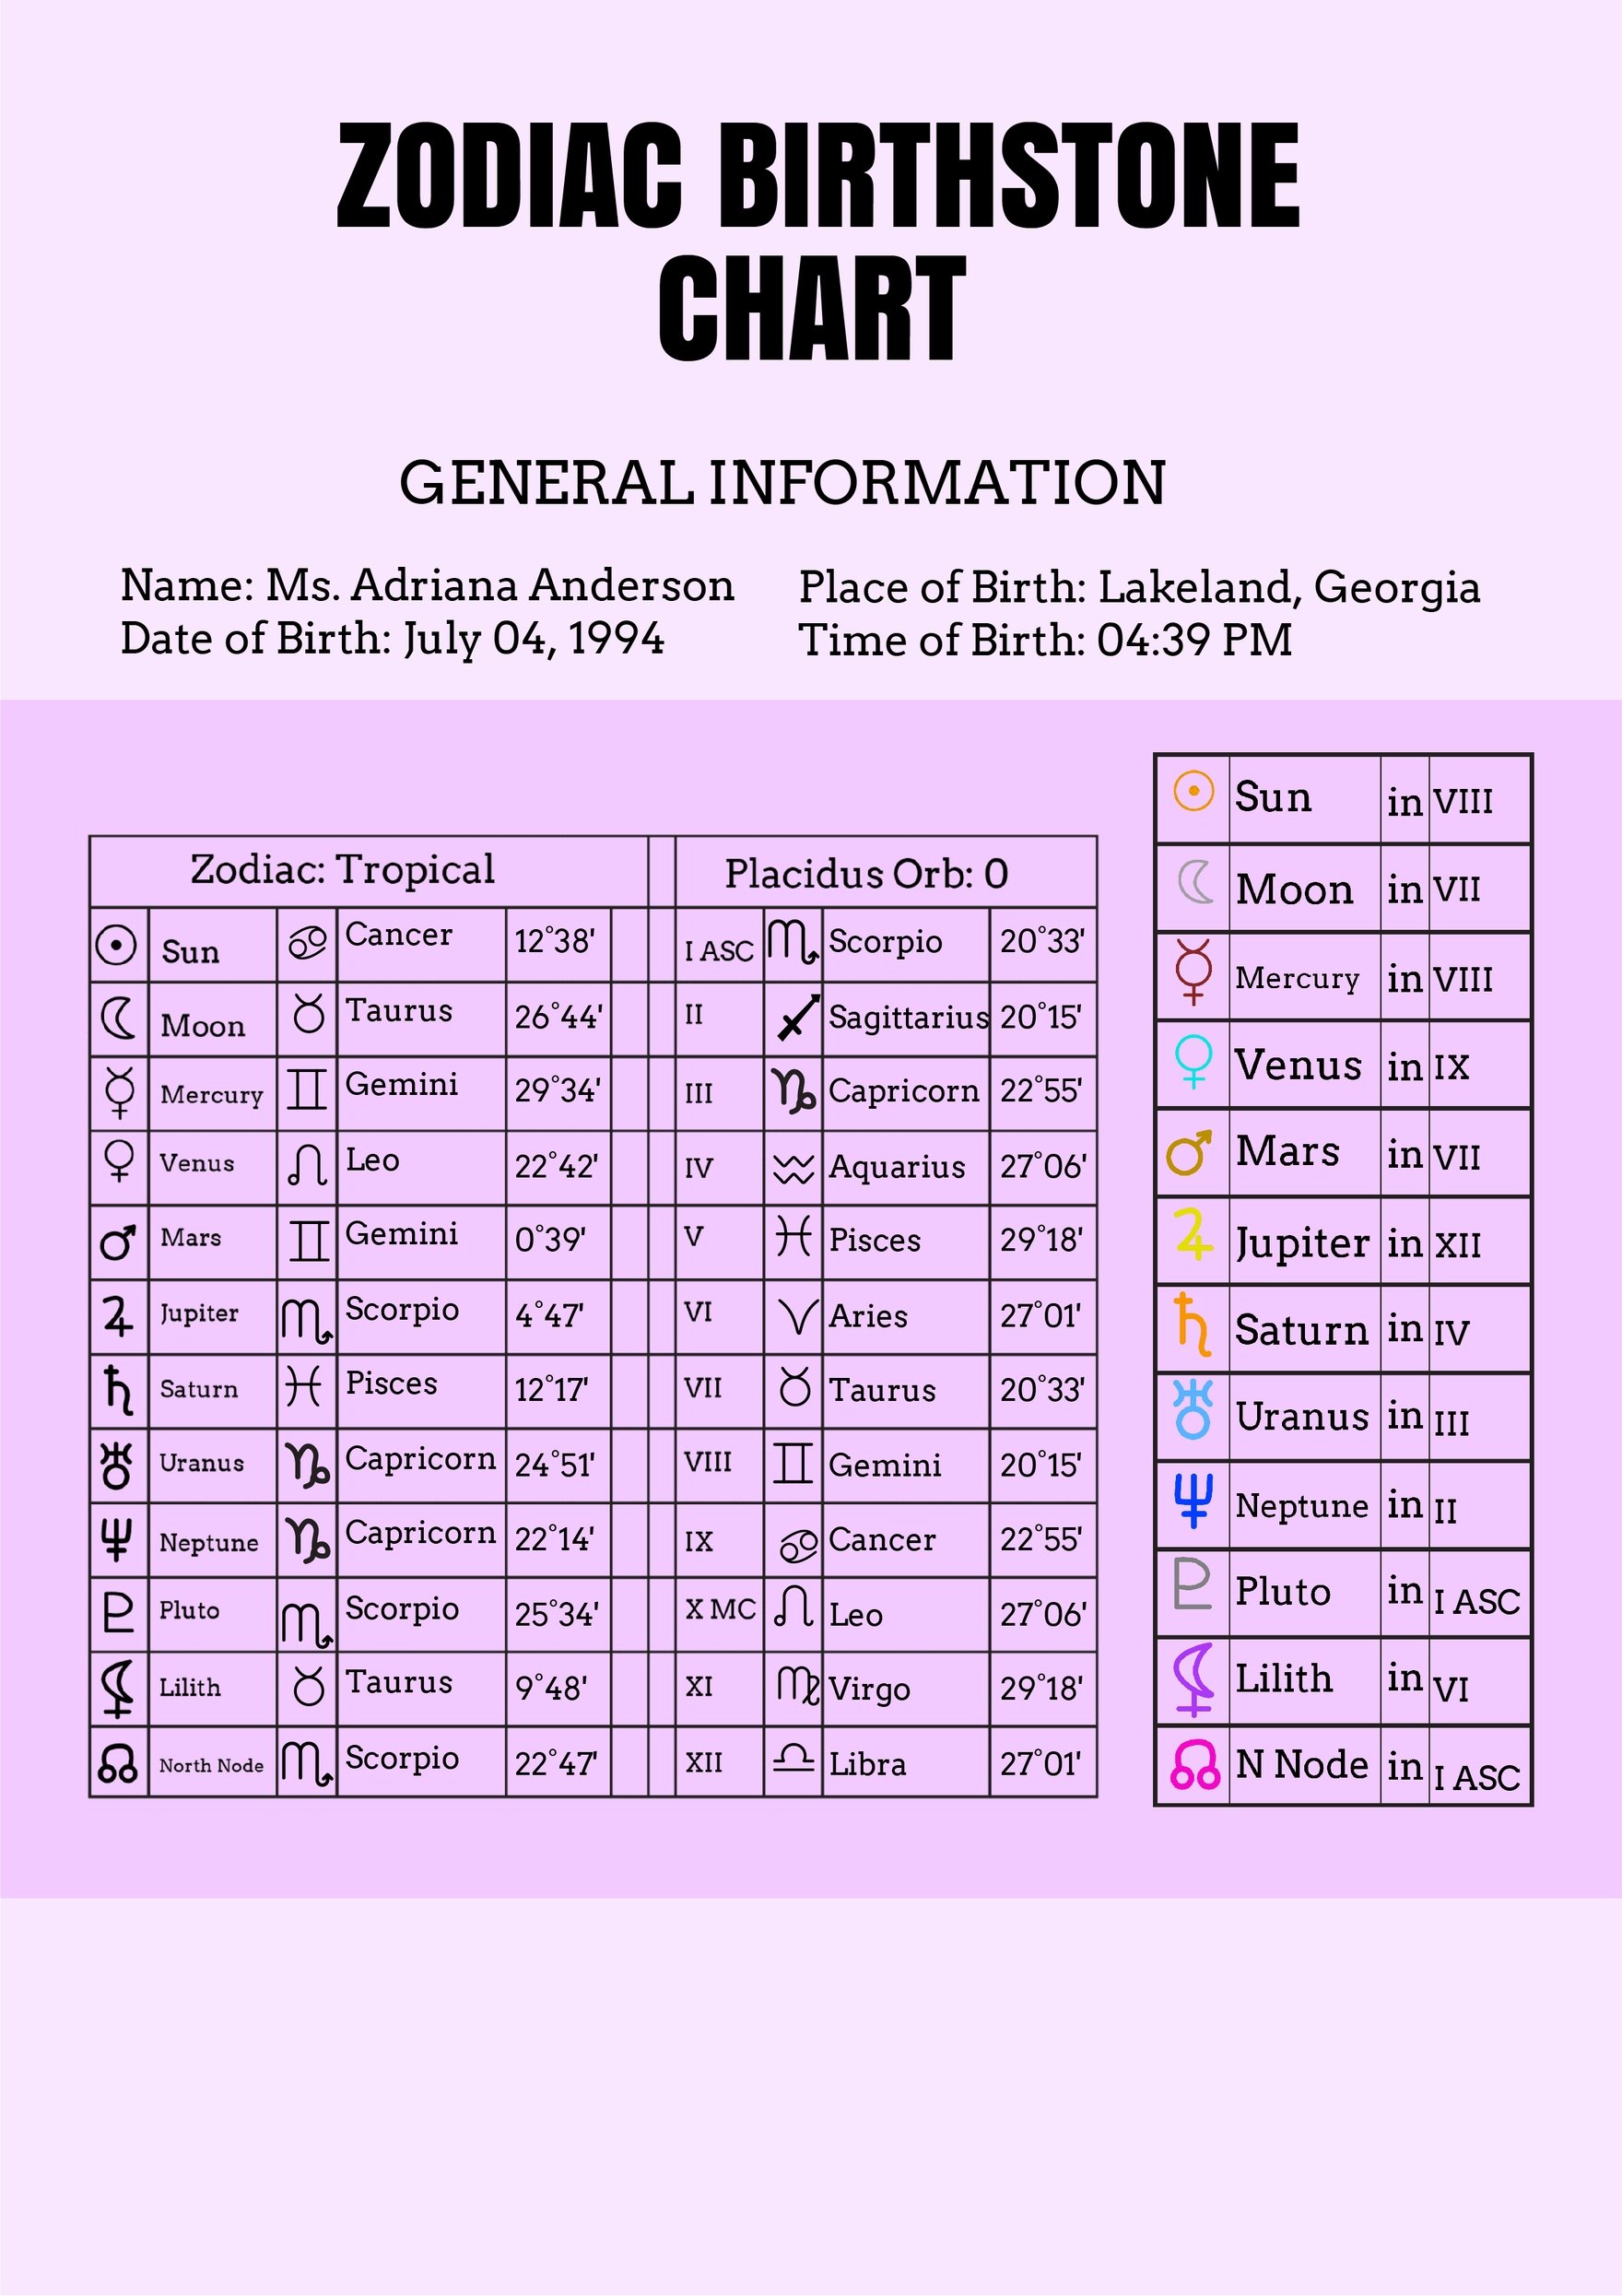 Zodiac Birthstone Chart Template in PDF, Illustrator